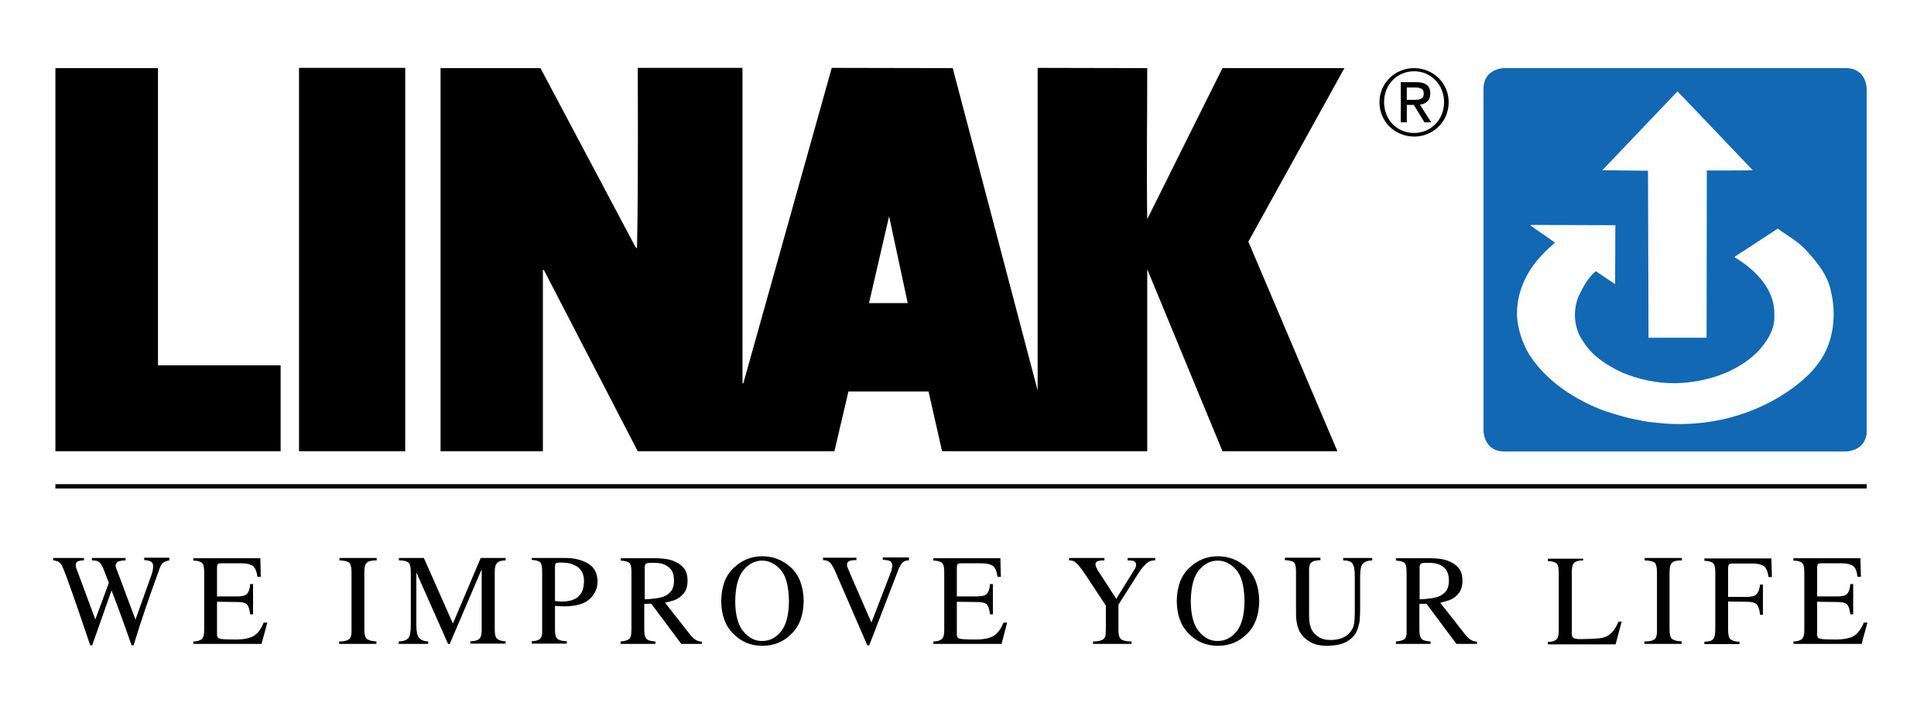 Brand: LINAK®